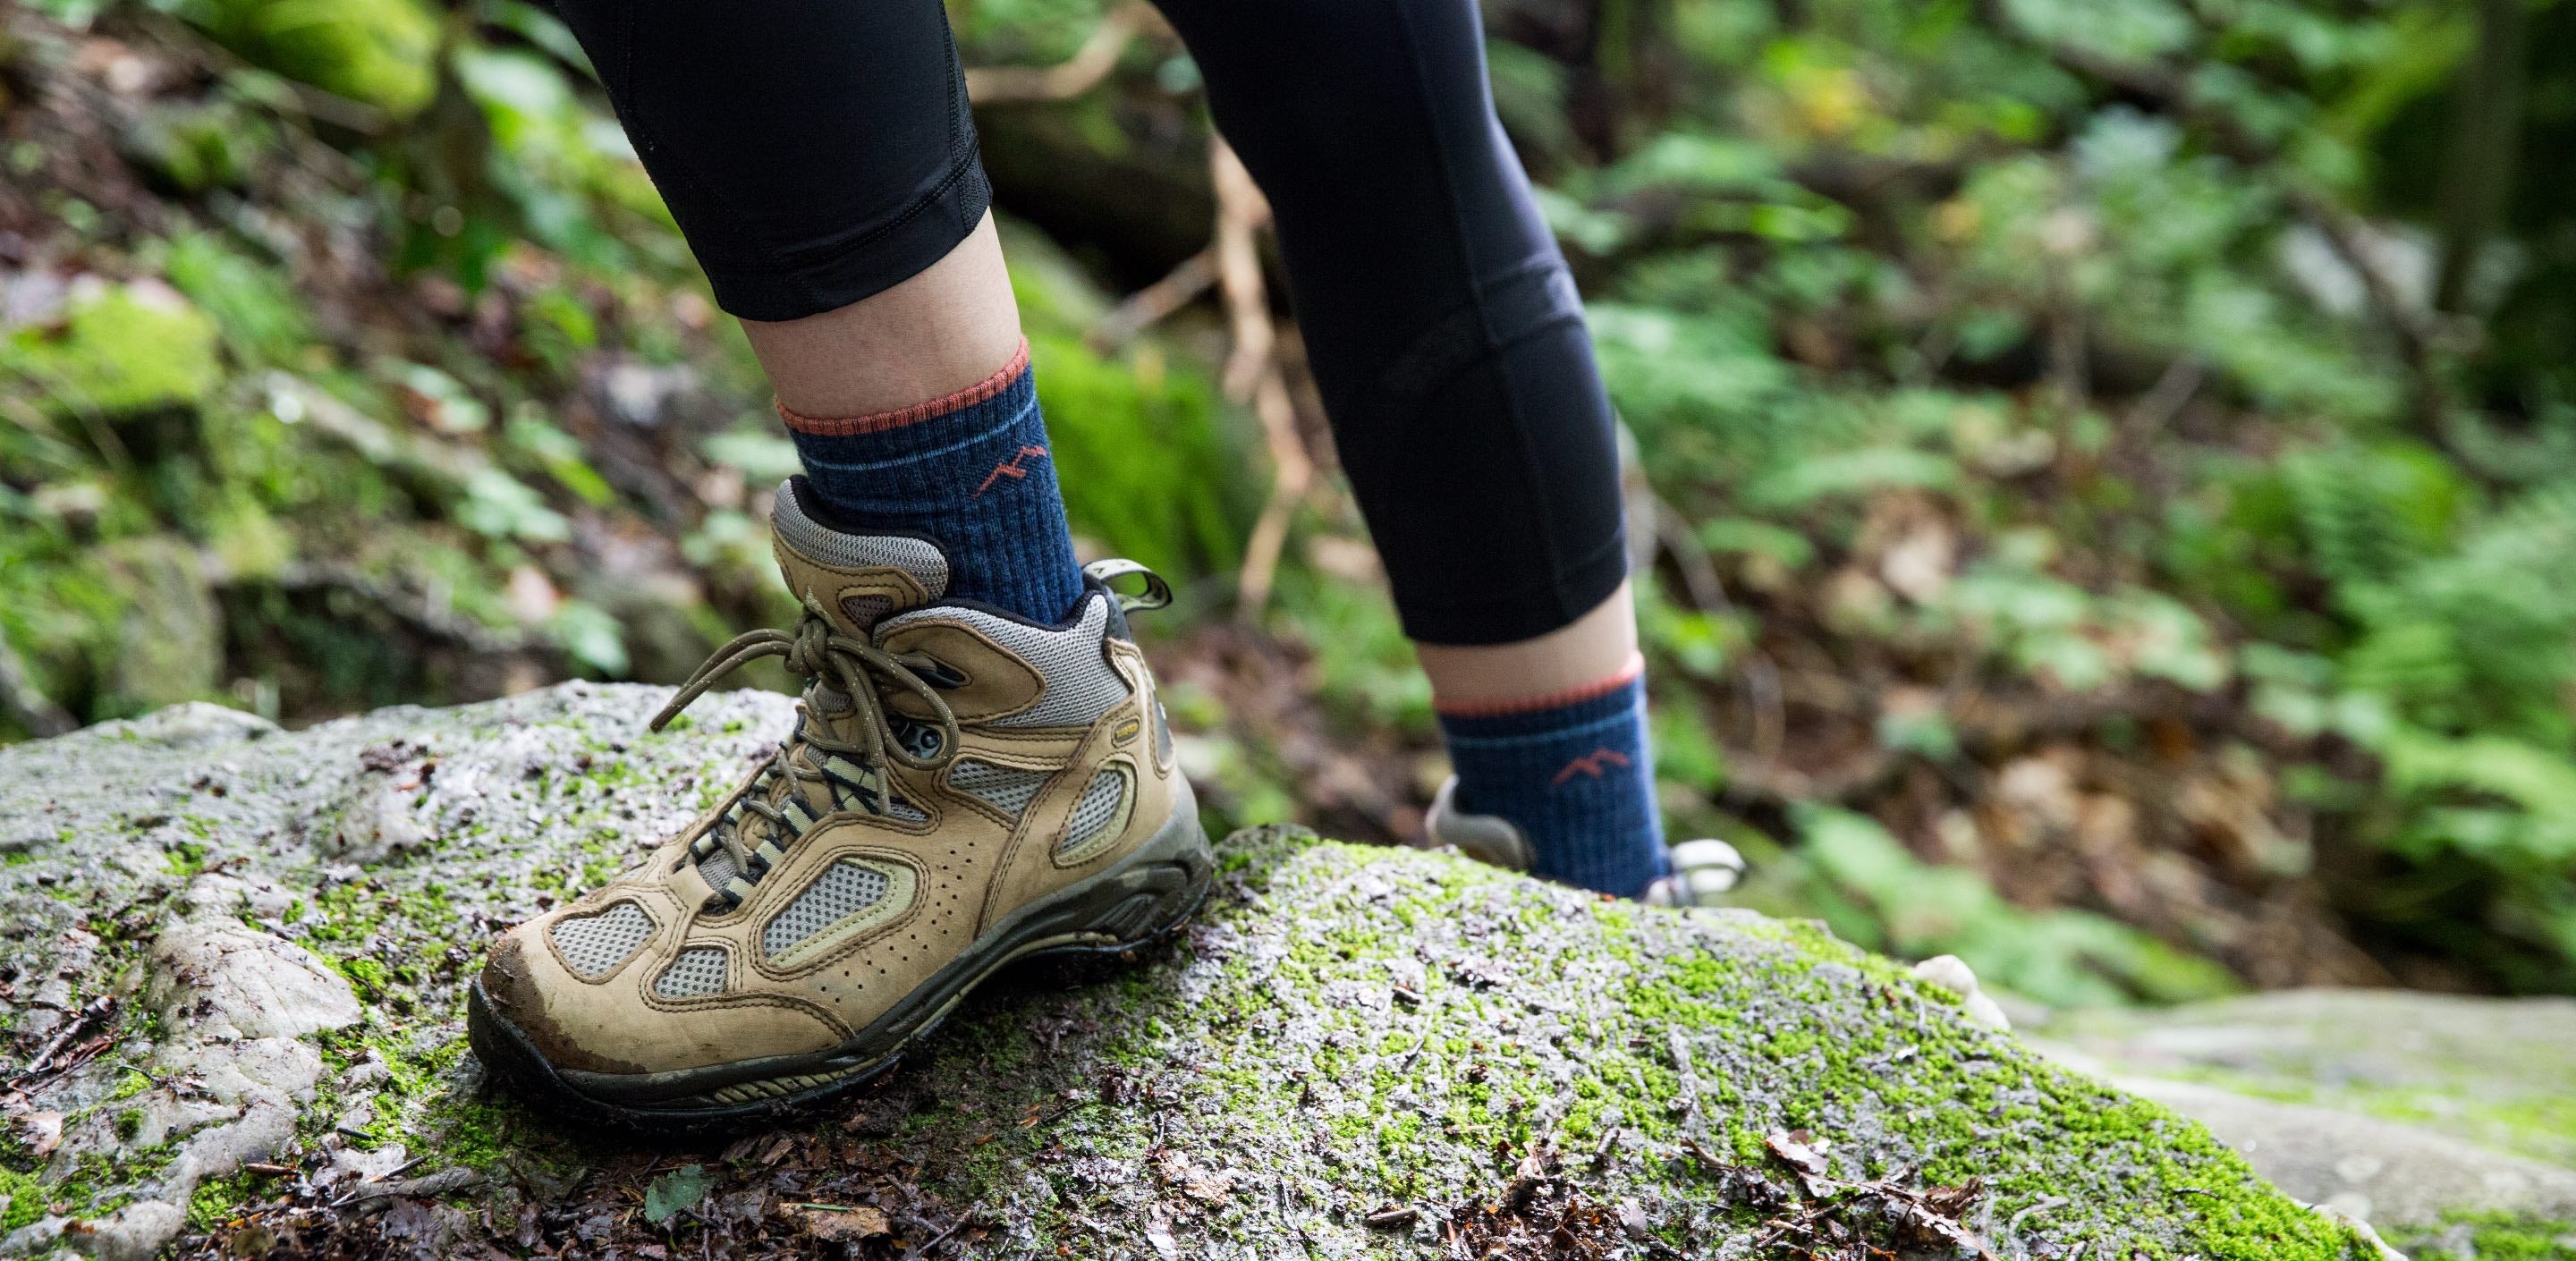 Woman wearing darn tough hiking socks made with merino wool, not cotton